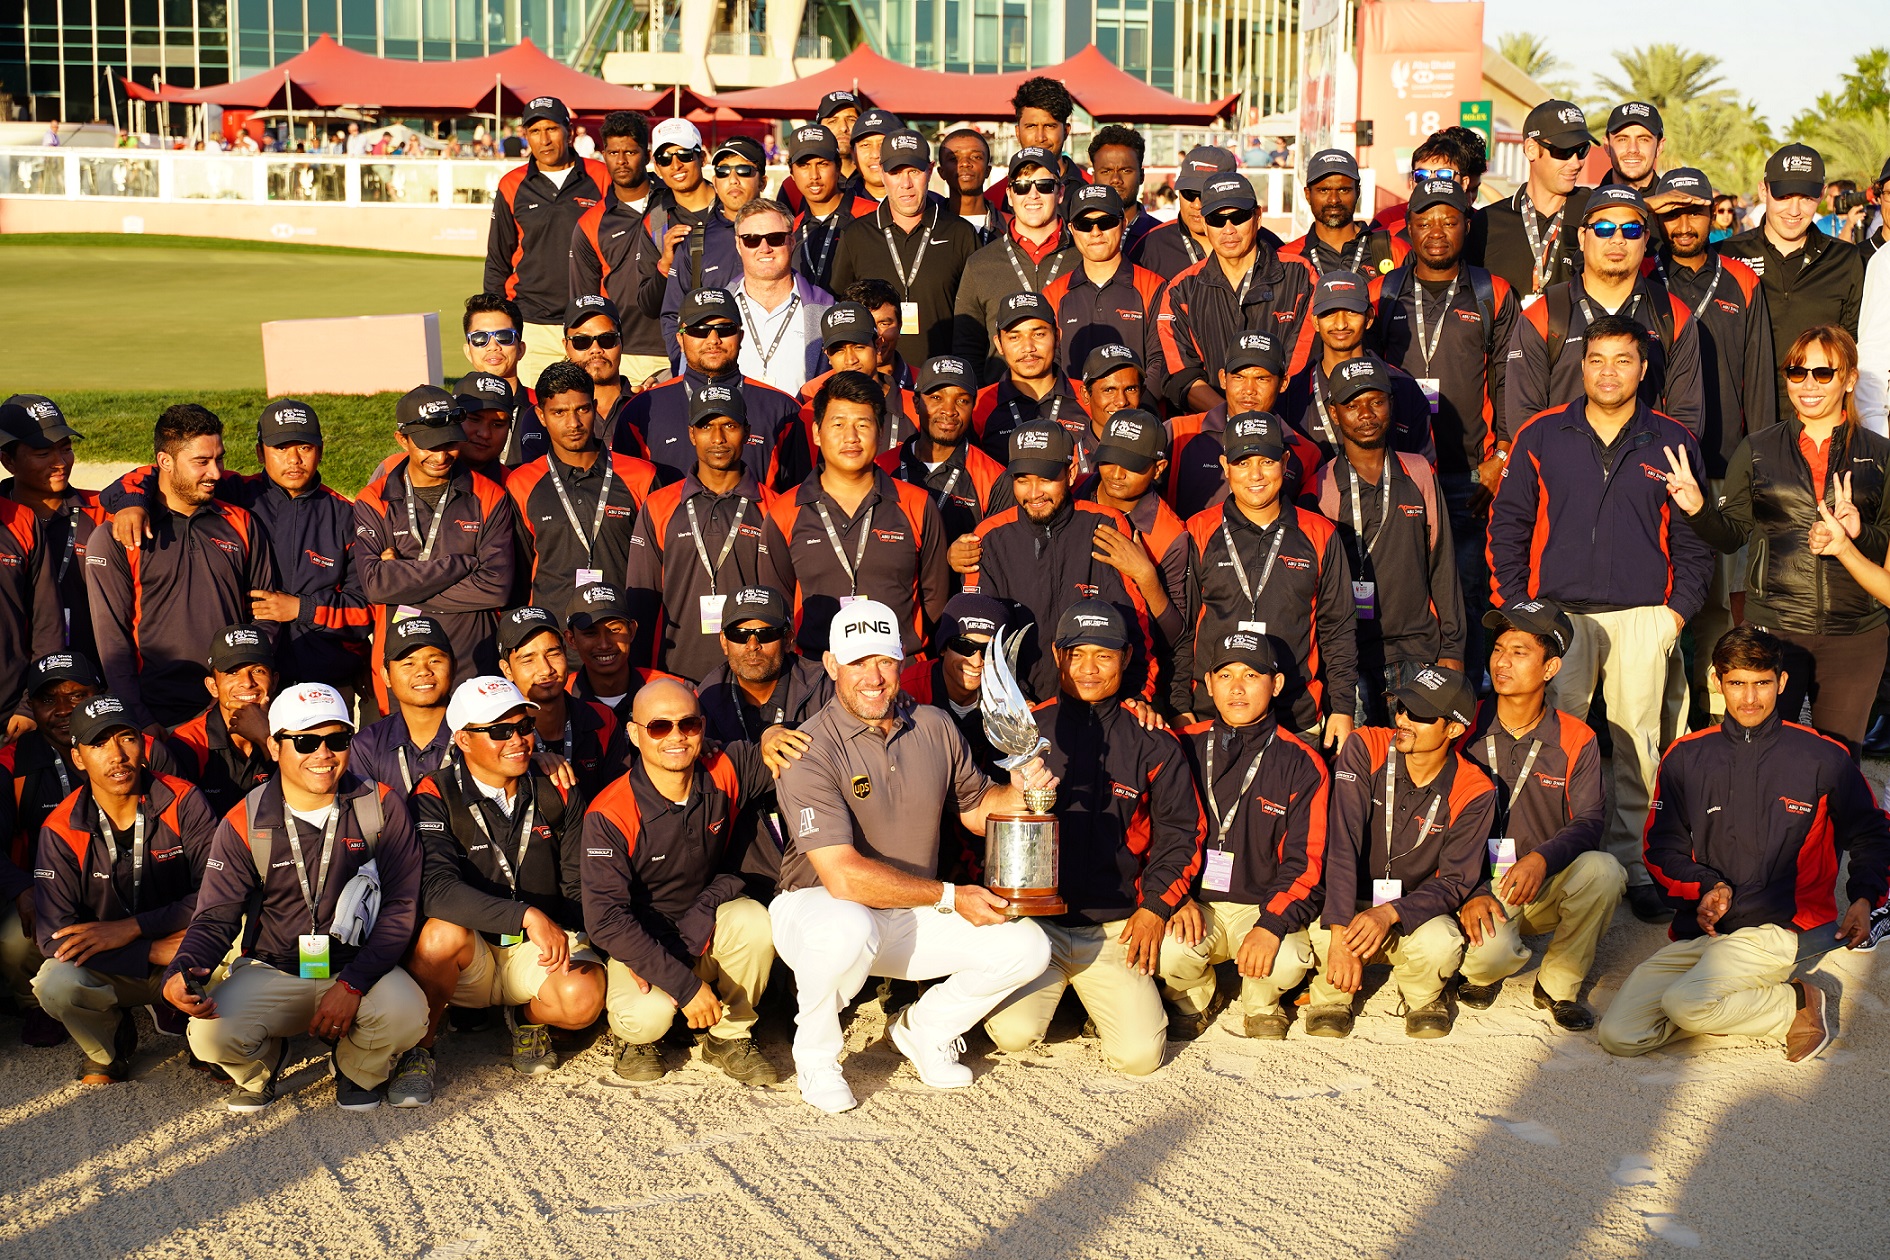 Abu Dhabi Golf Club Hosts Golf’s Biggest Names At The Abu Dhabi HSBC Championship